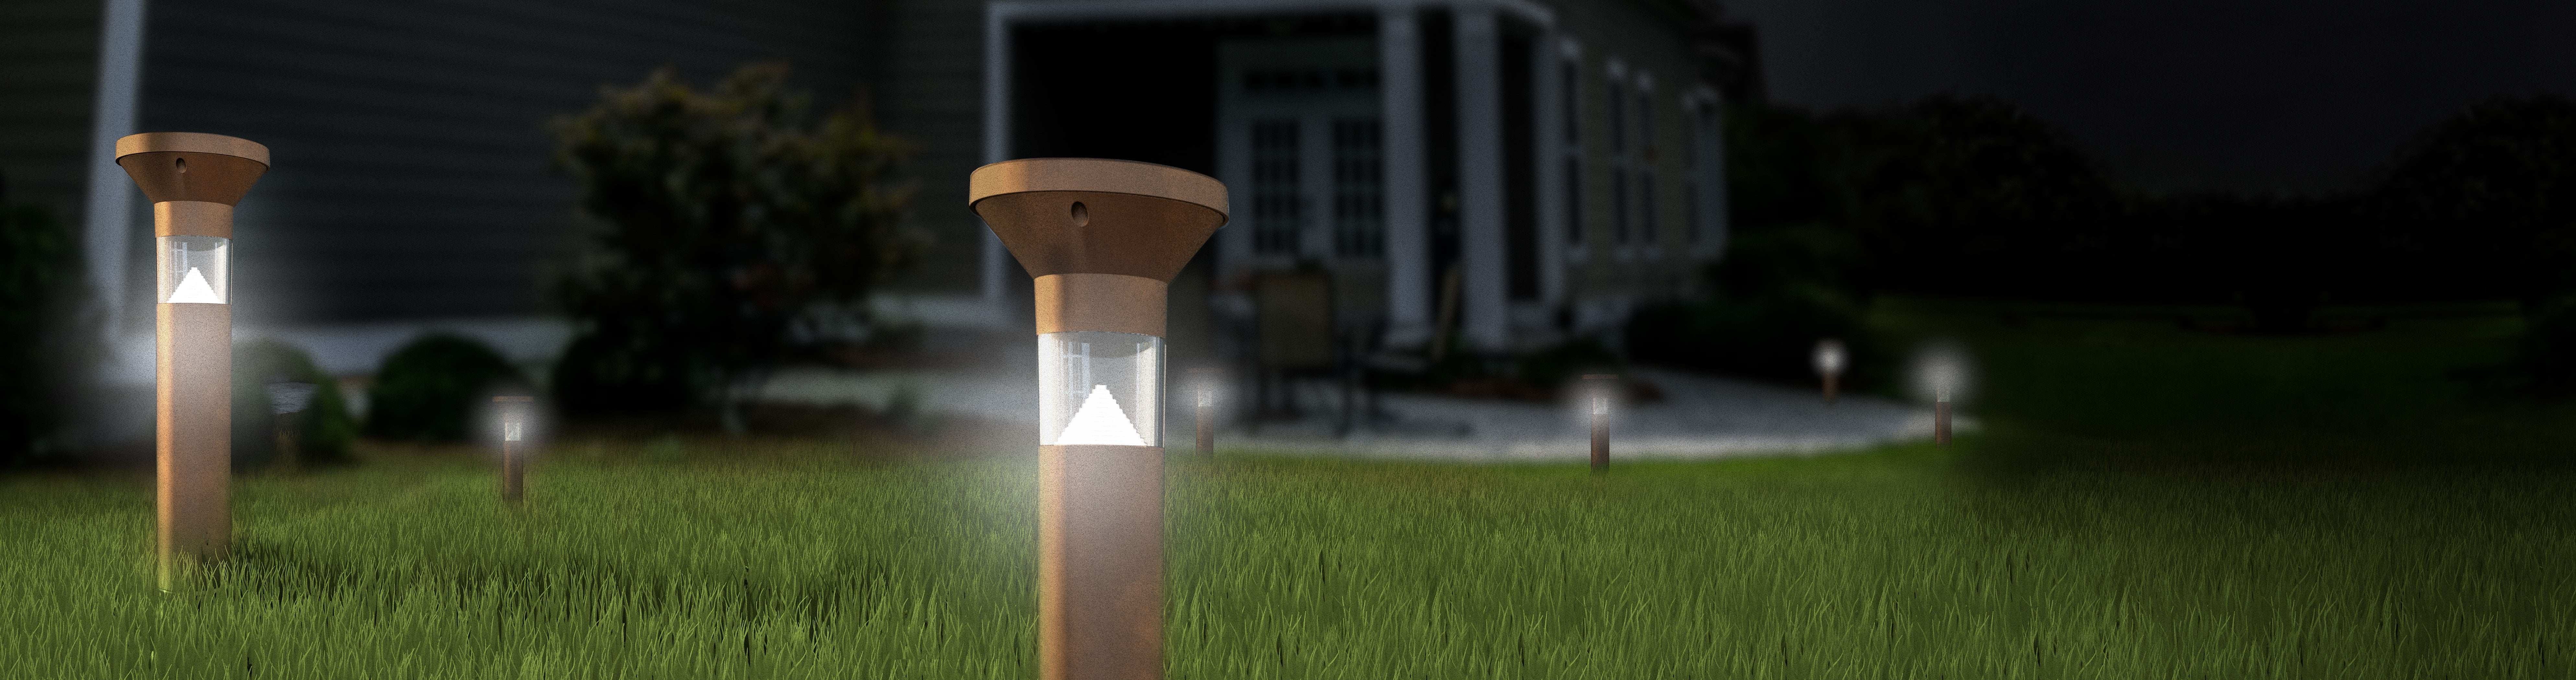 Feit Electric Onesync landscape bollard light in yard at night